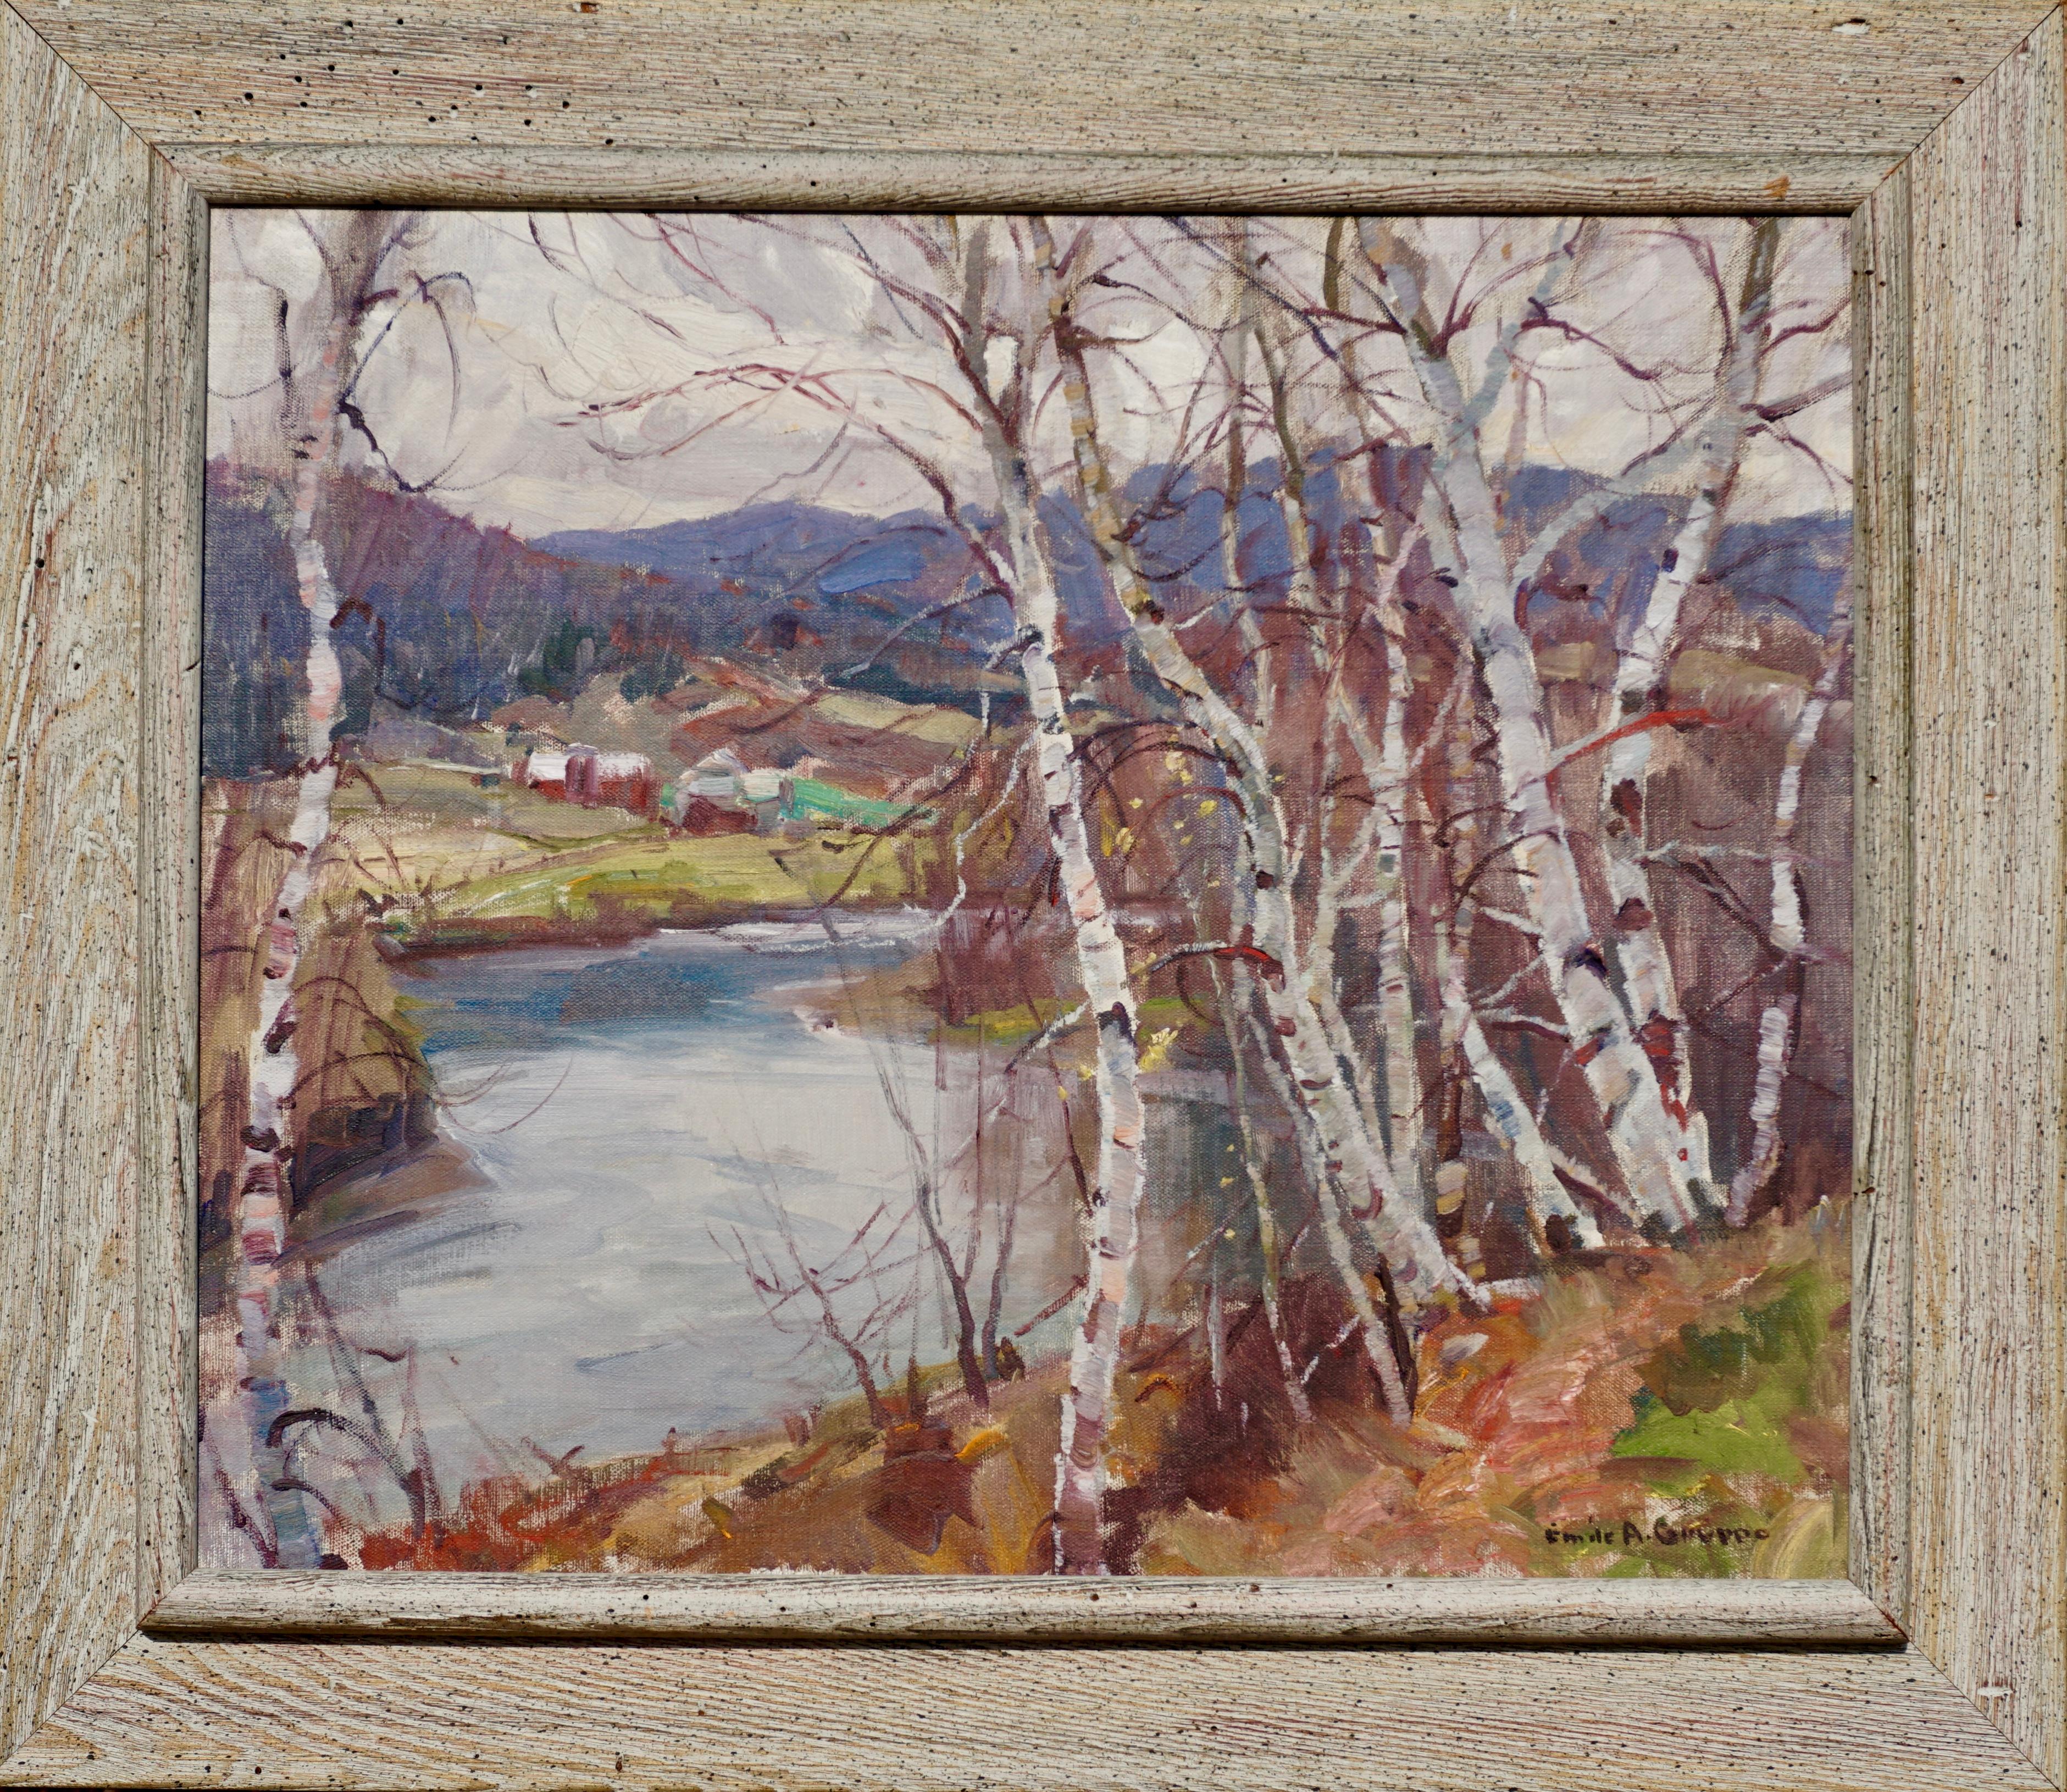 Adirondack Emile Albert Gruppe “Birches” Oil on Canvas, circa 1950